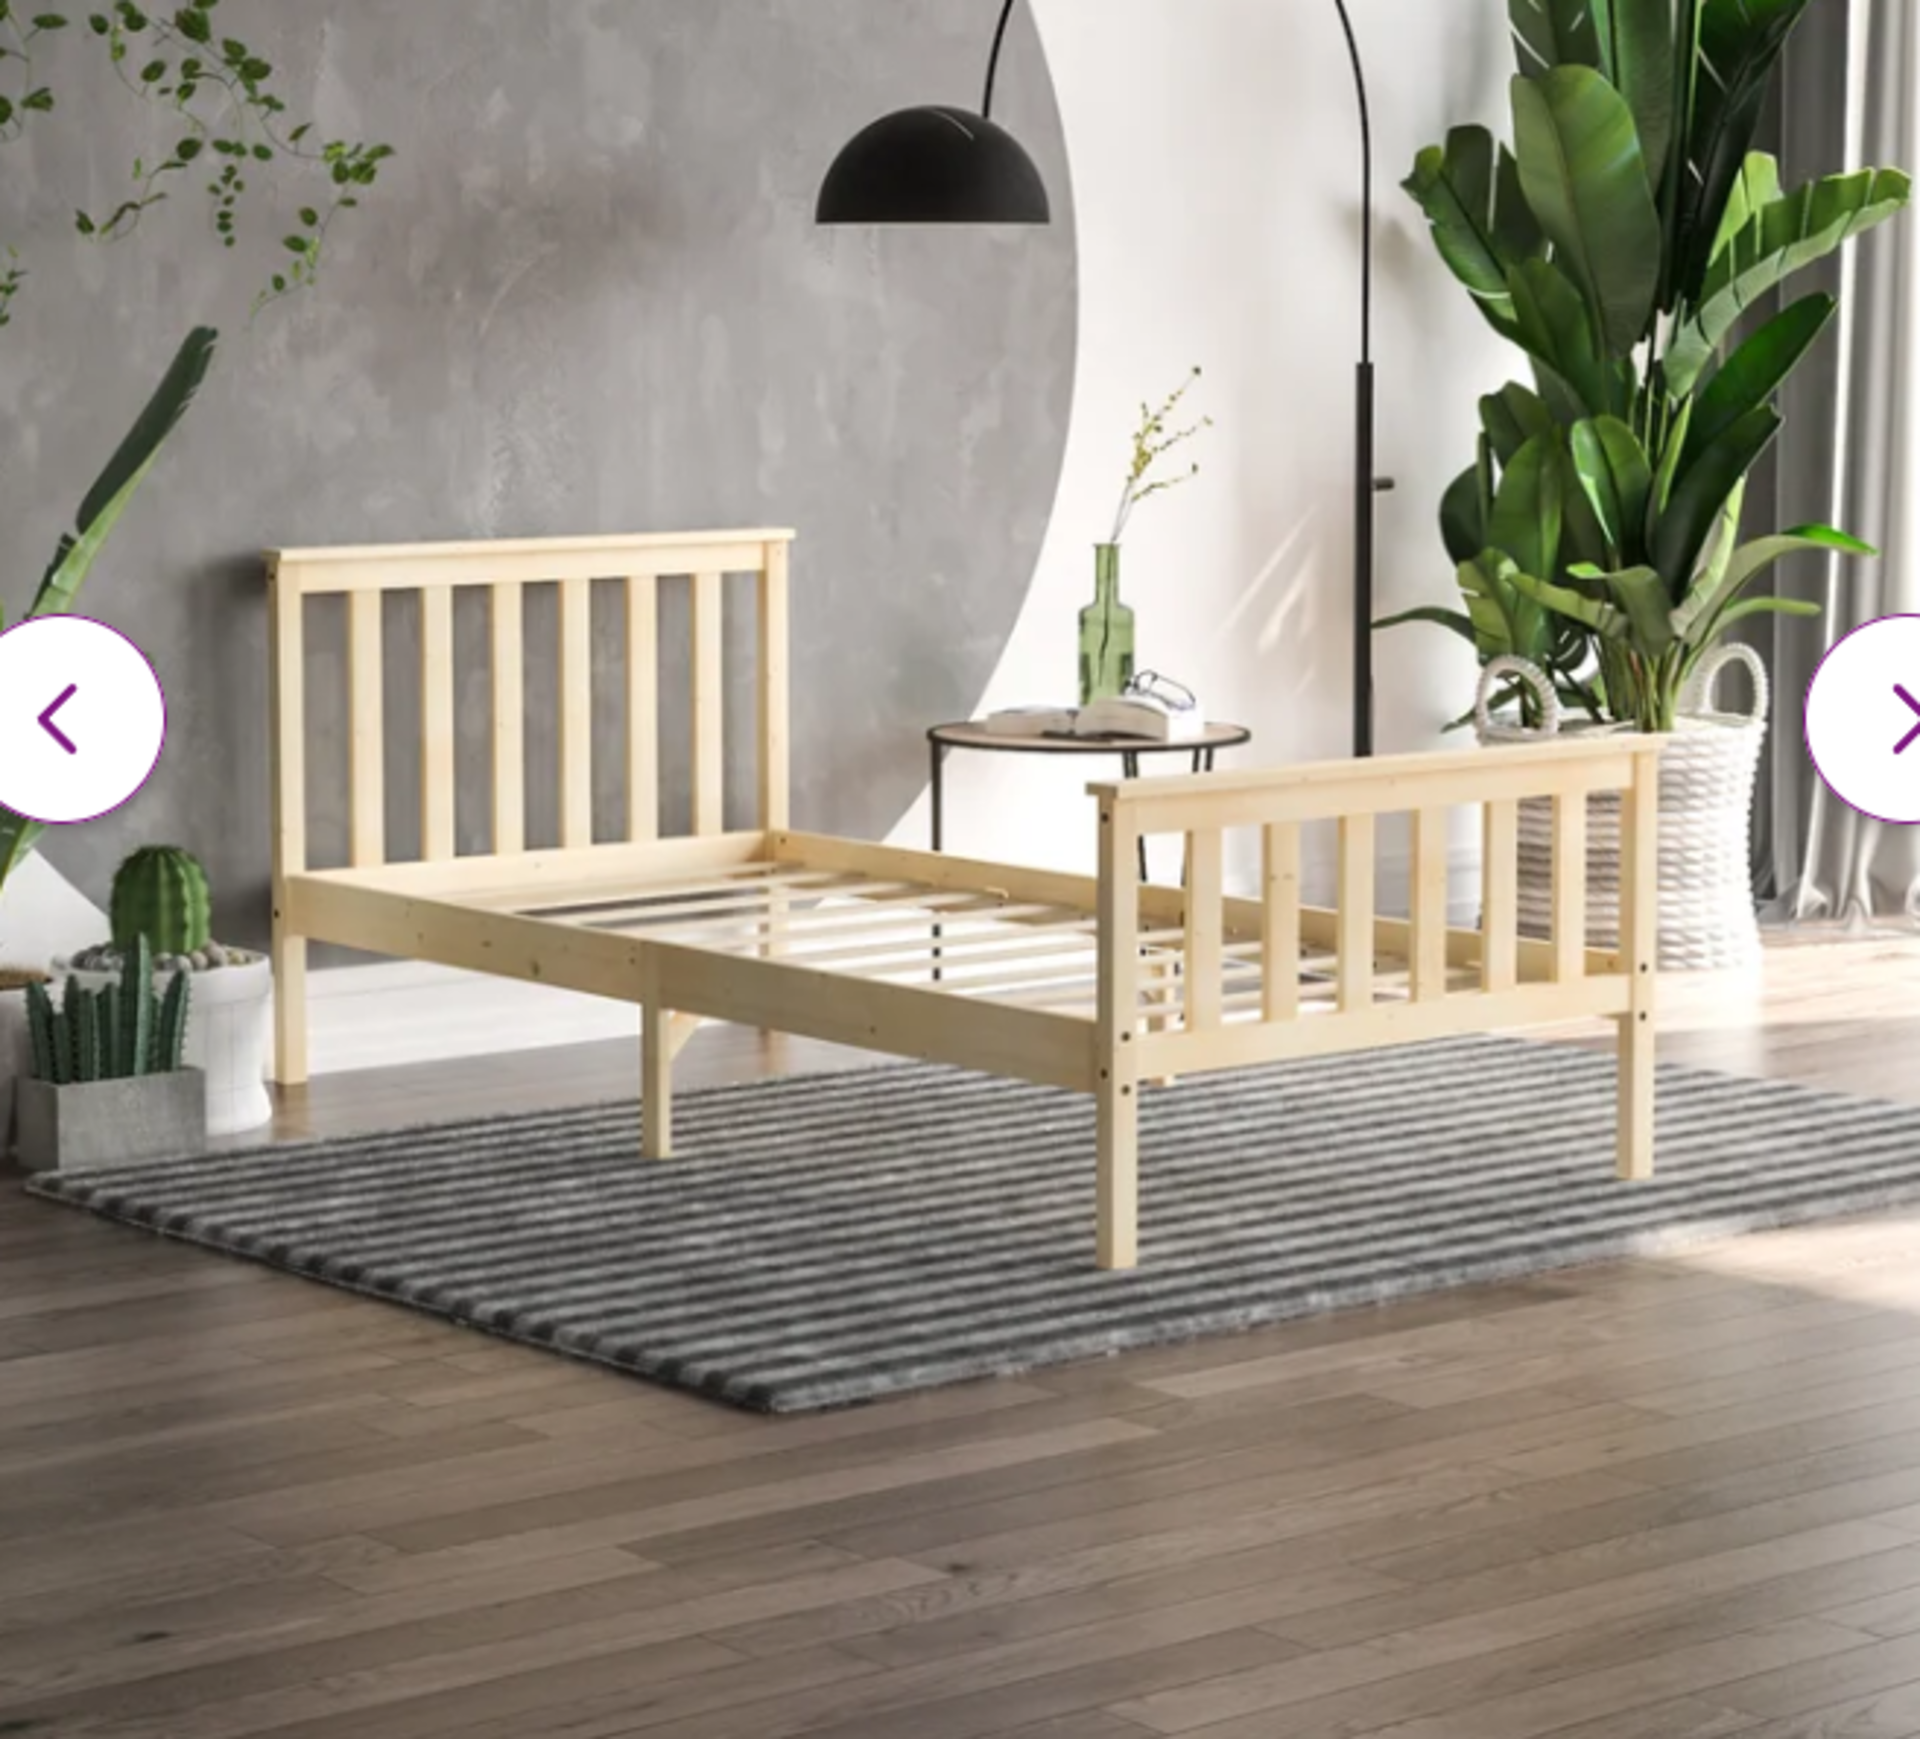 Vida Designs Milan Bed Frame. RRP £119.99. Natural Wood Grain Color Variation (No item has the - Image 2 of 2